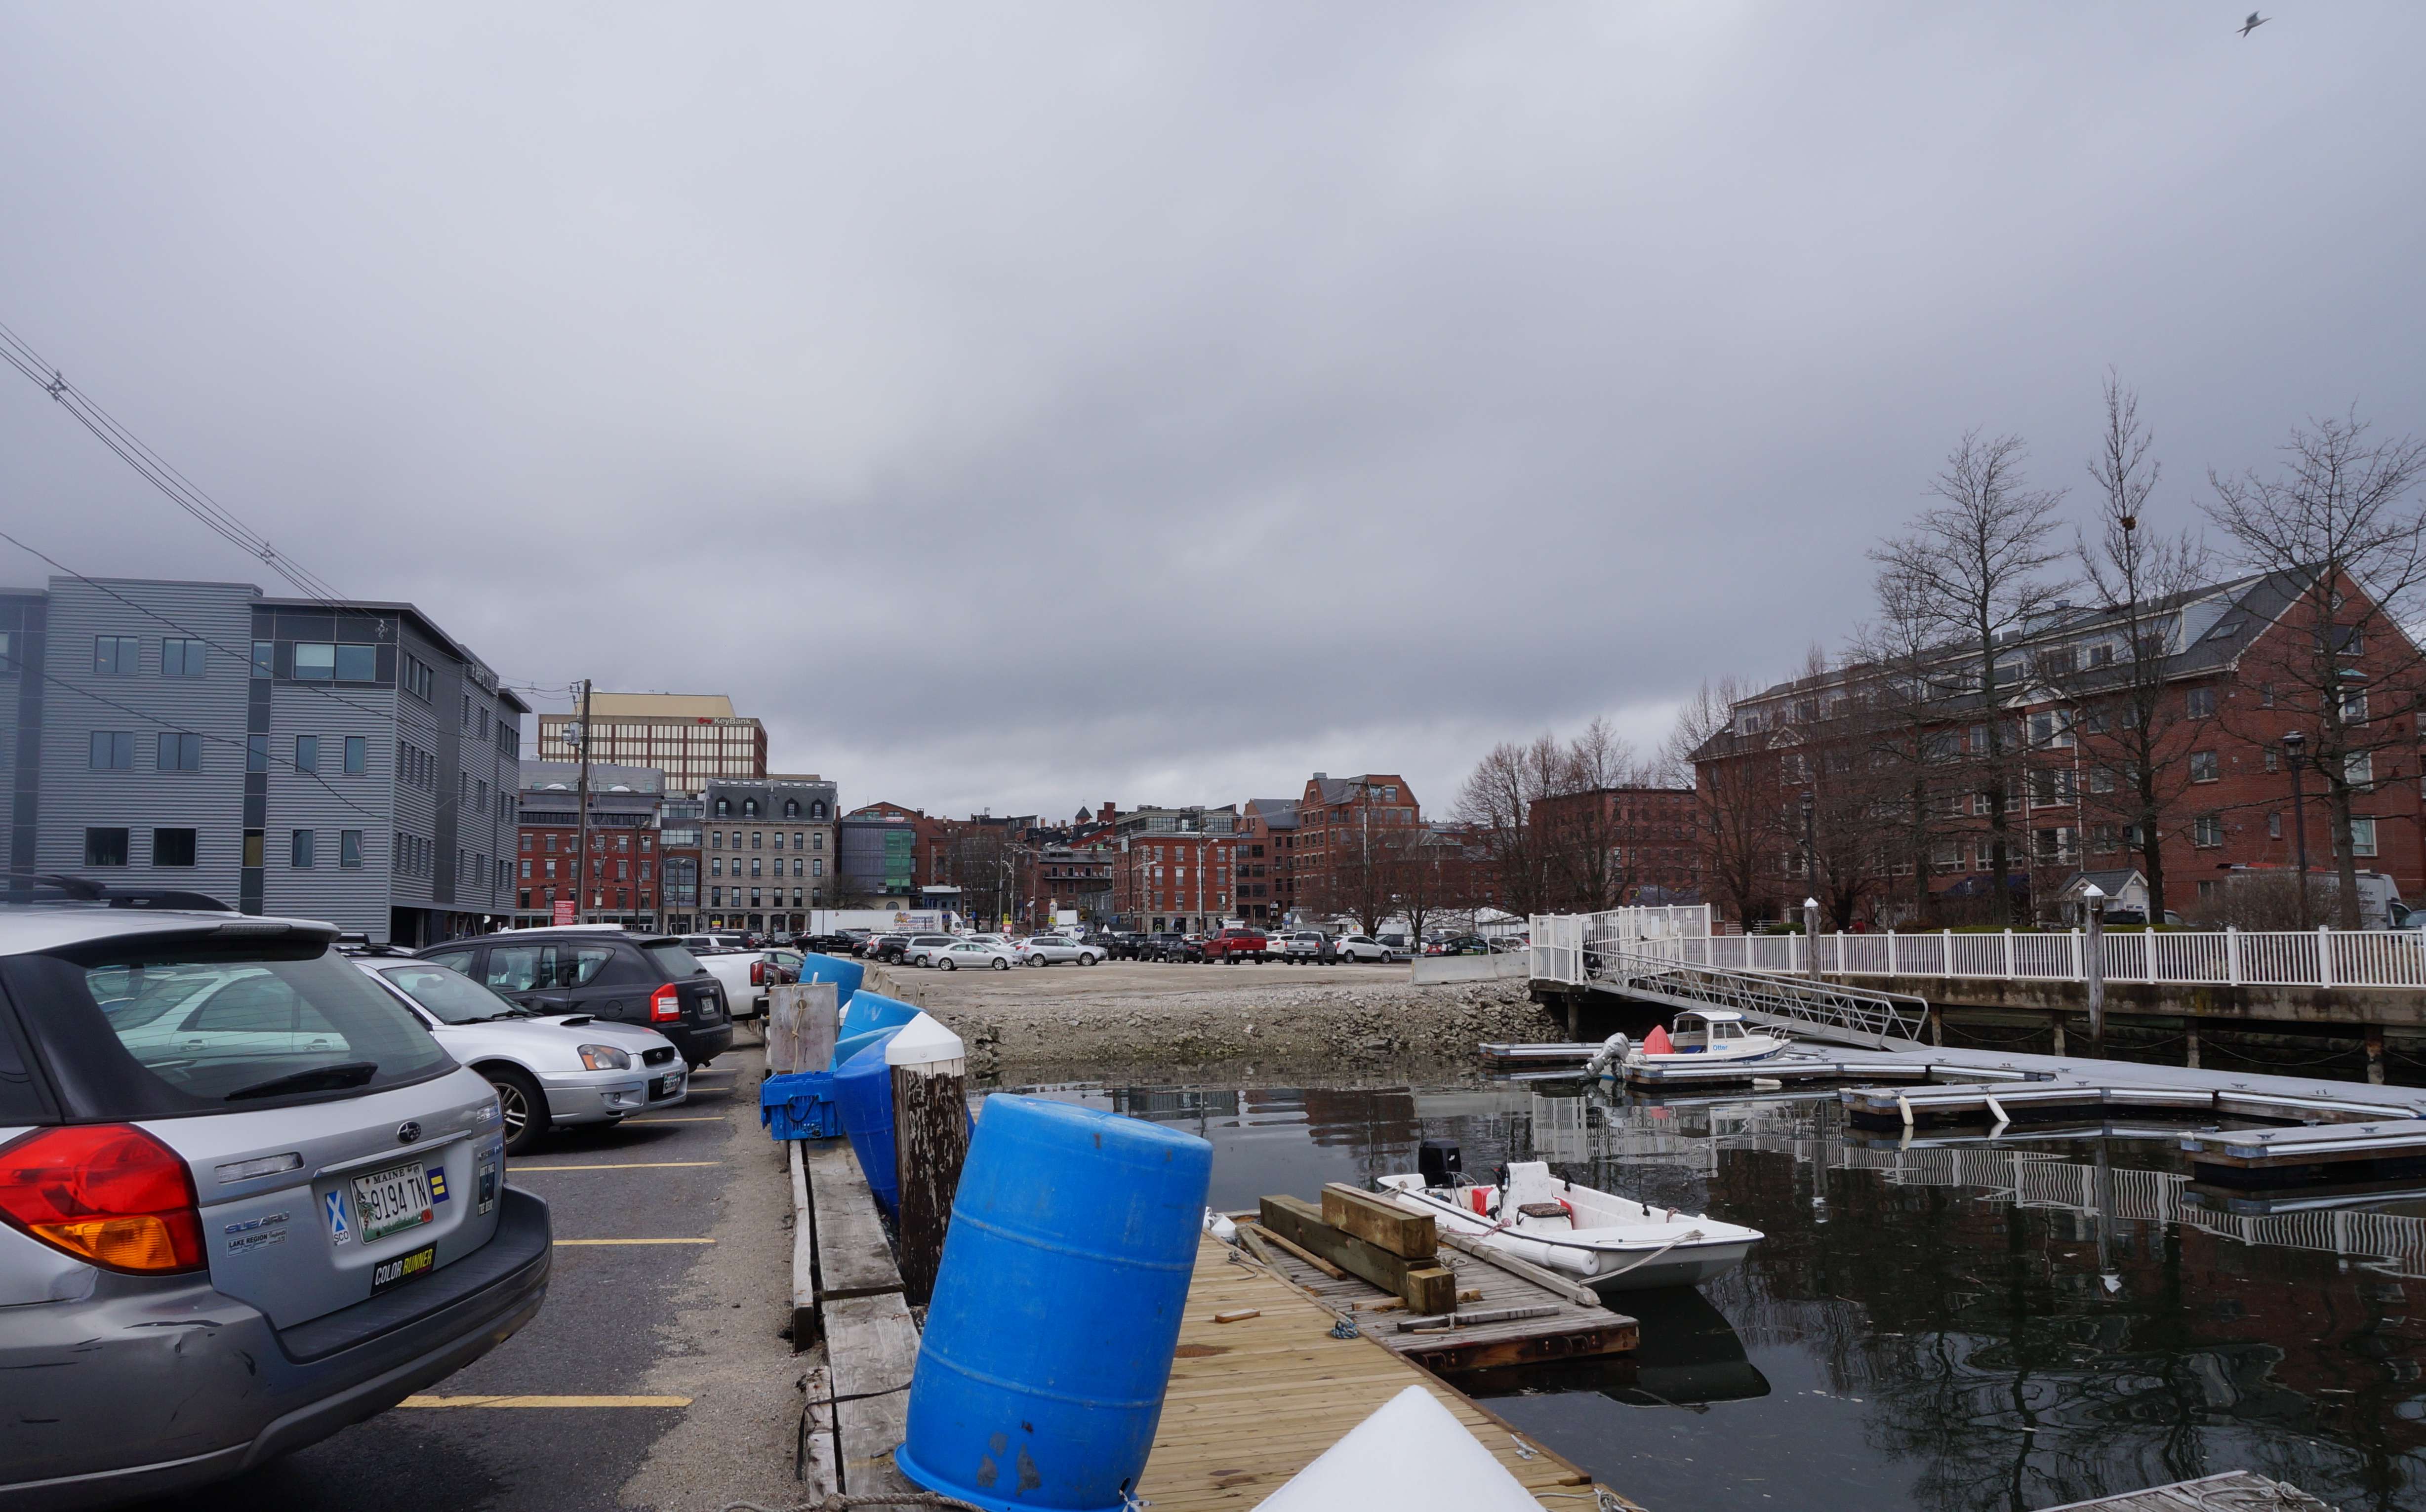 Fisherman's Wharf parking lot